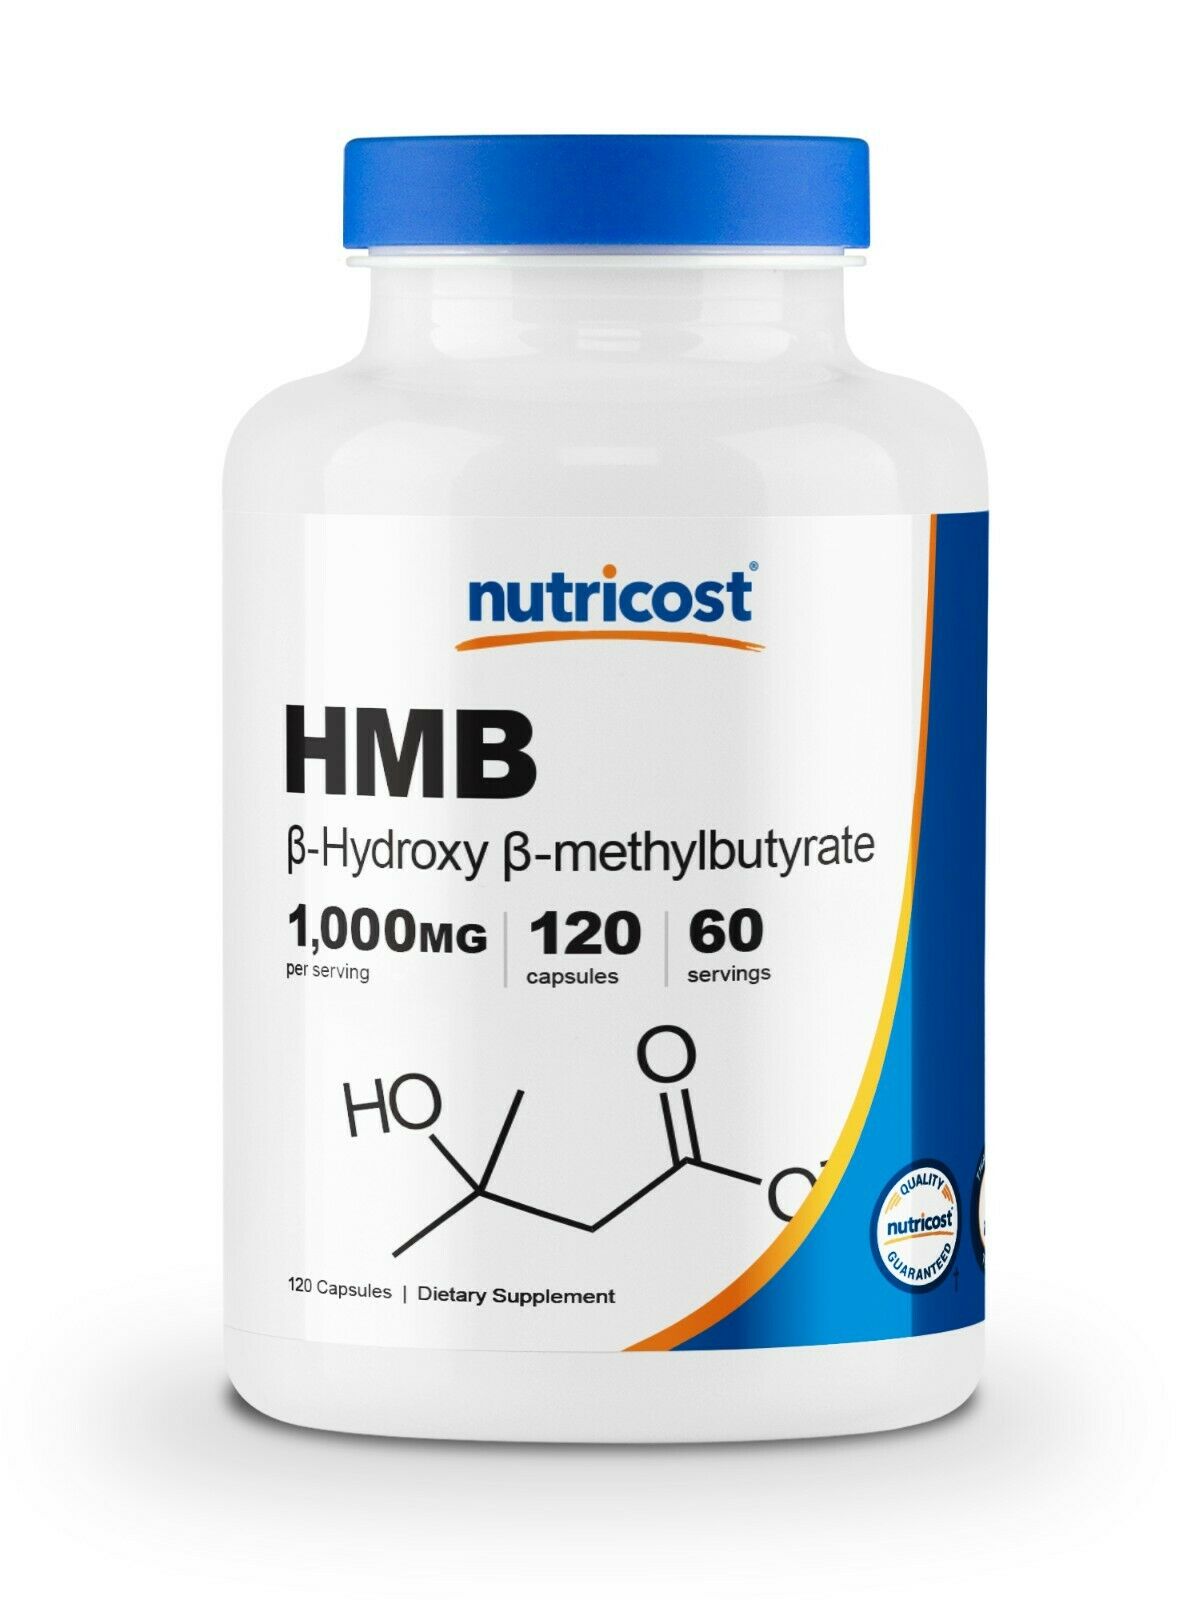 Nutricost Hmb (beta-hydroxy Beta-methylbutyric) 1000mg (120 Capsules)